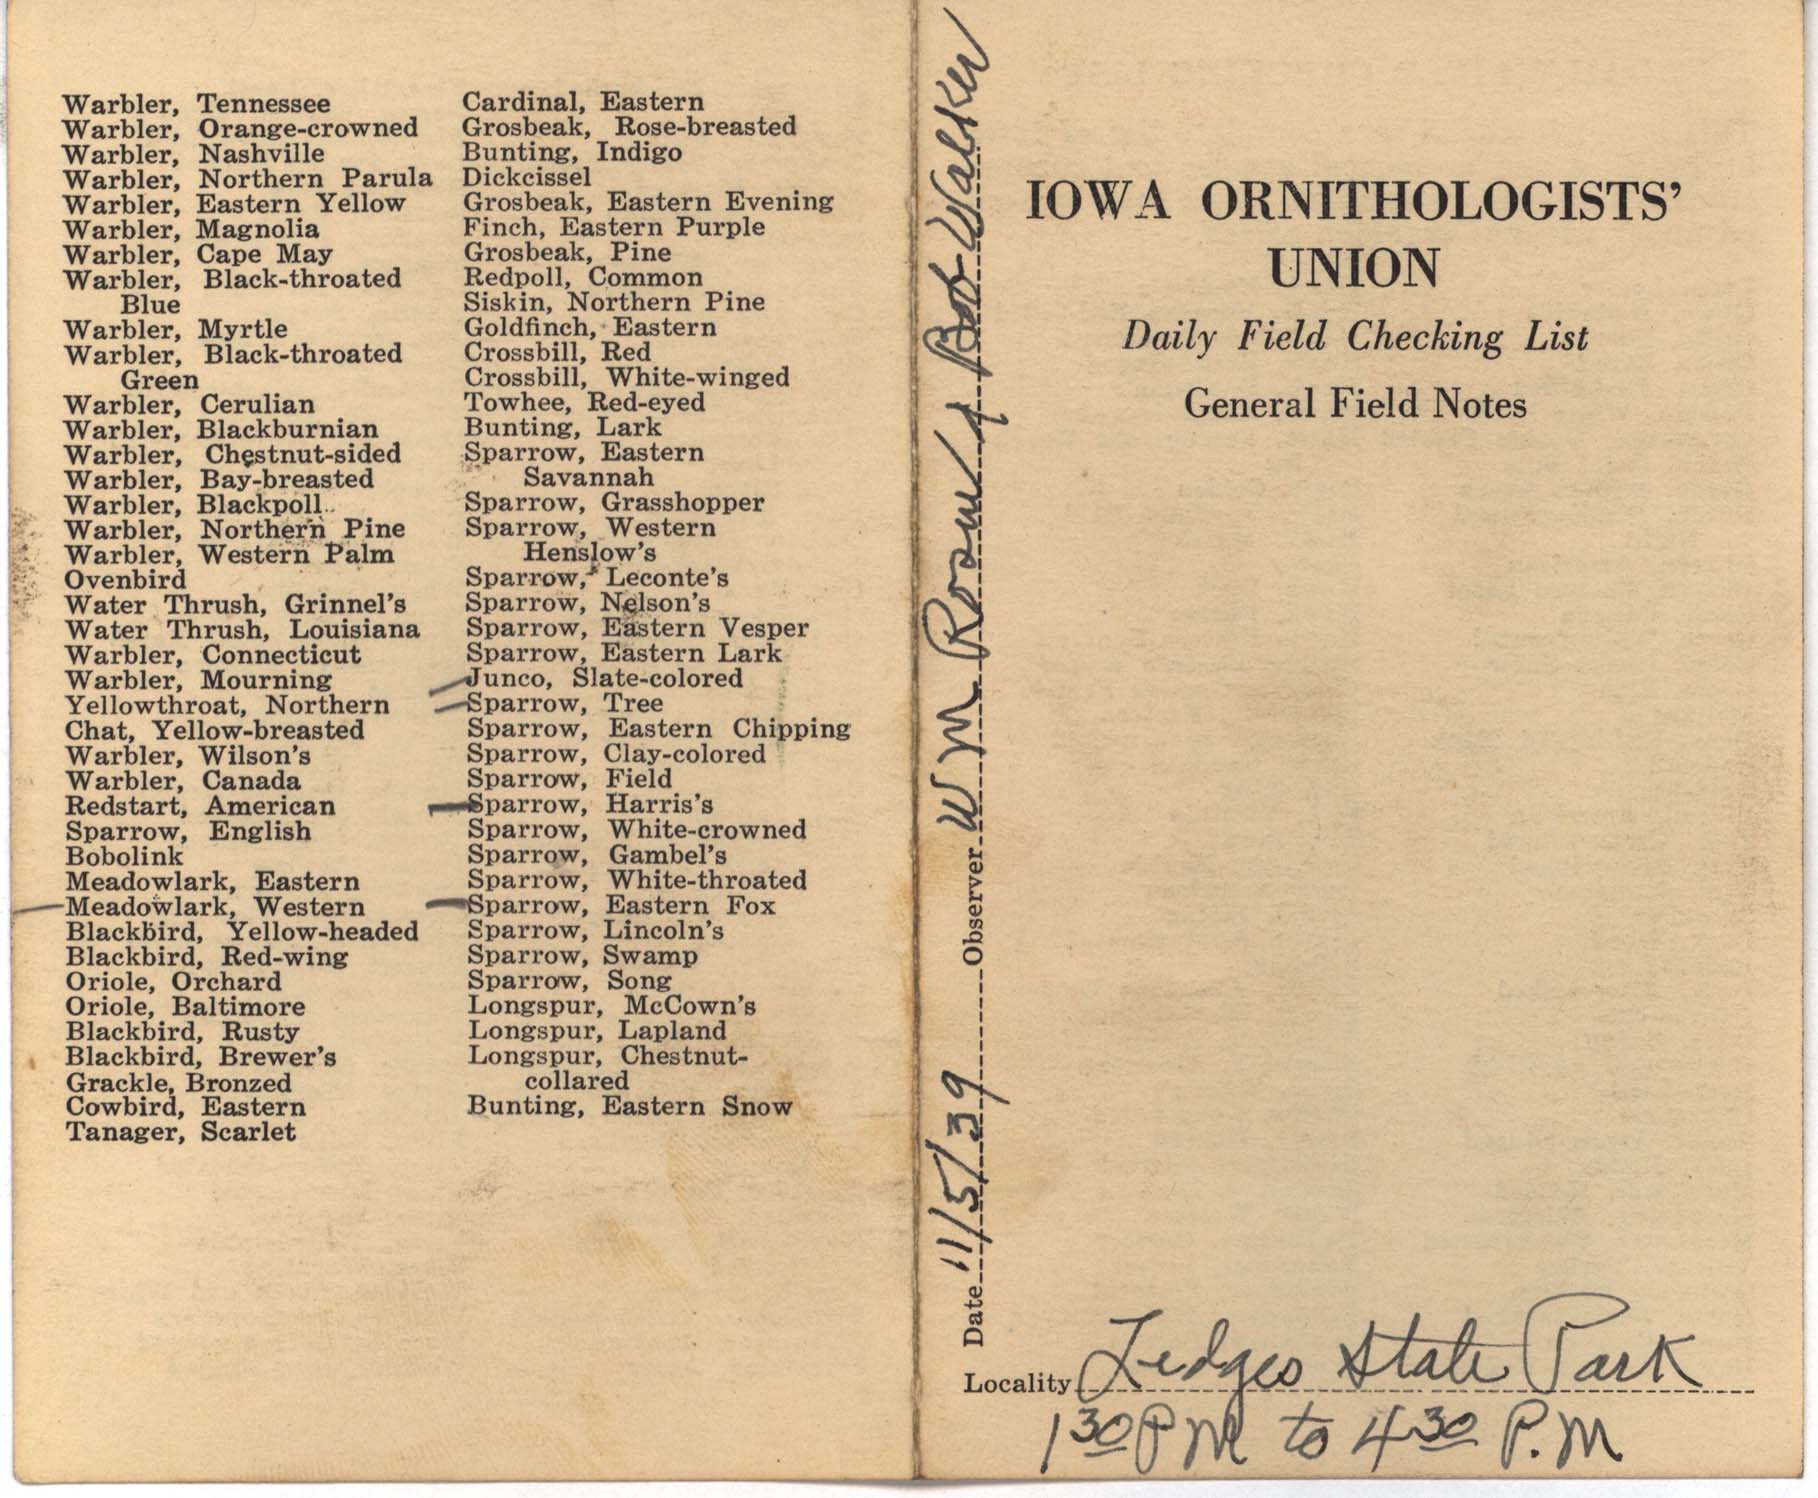 Daily field checking list by Walter Rosene, November 5, 1939